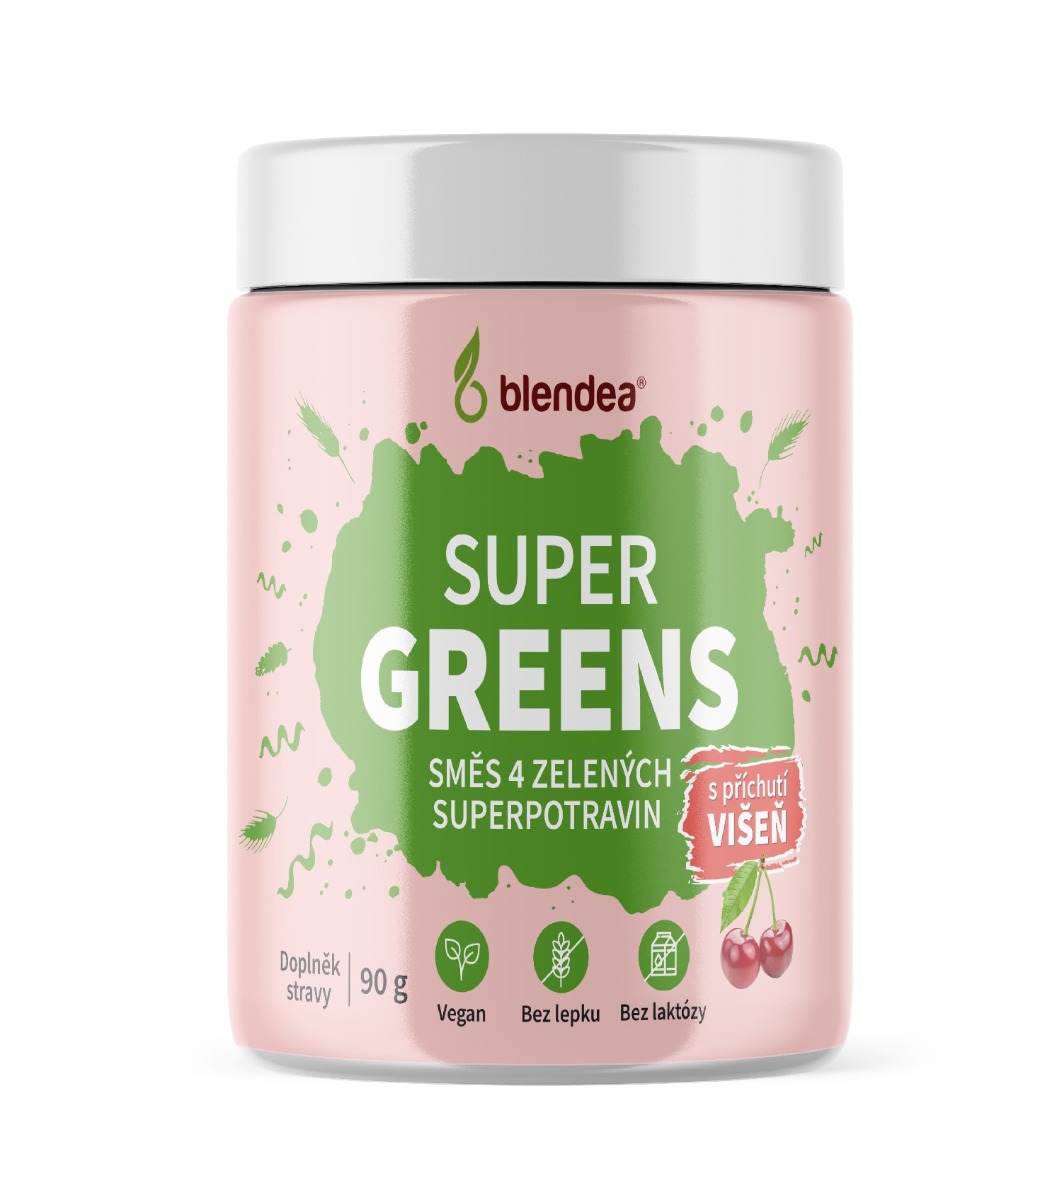 Blendea Super Greens višeň 90 g Blendea